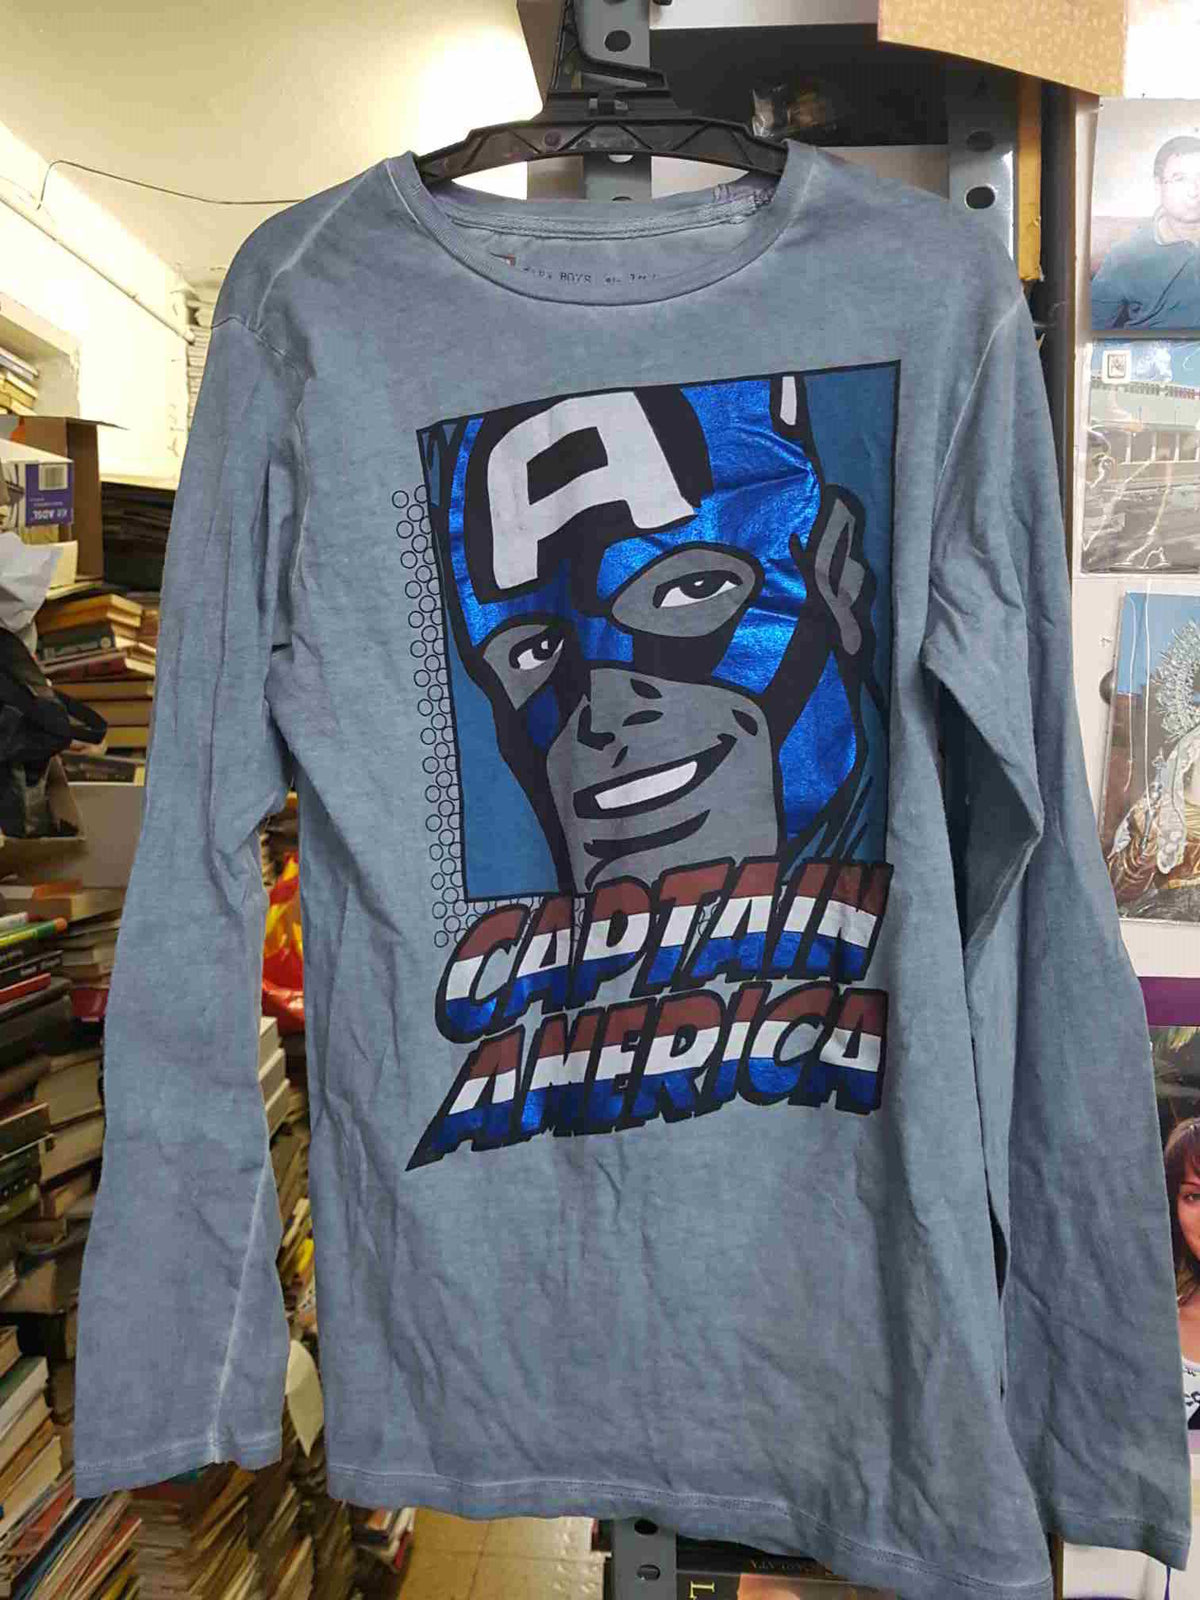 Camiseta del Capitan Trueno. Zara Boys collection size 13-14